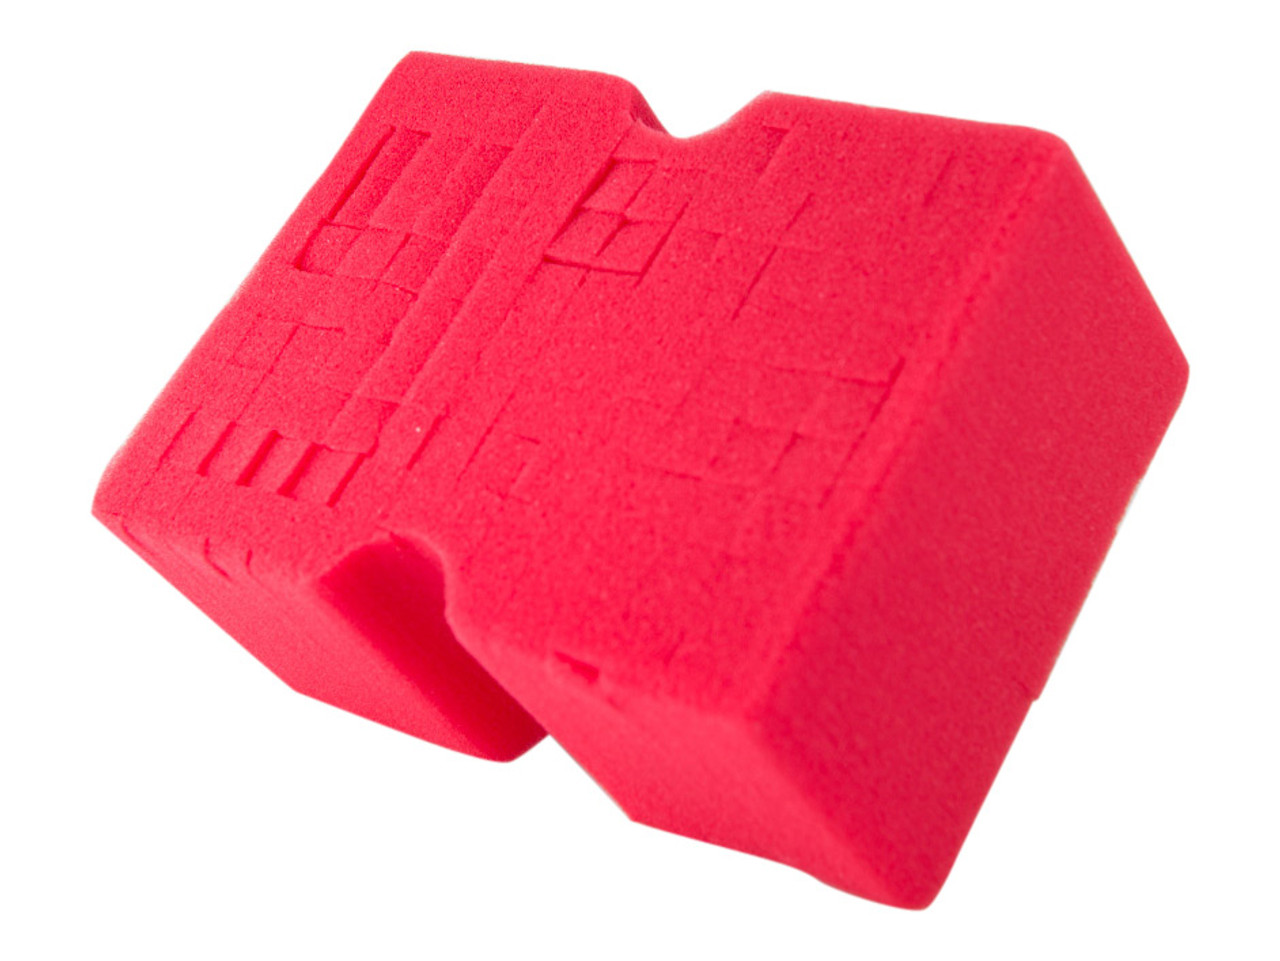 Do you need the BIG RED SPONGE? My take on Optimum Polymer Technologies 